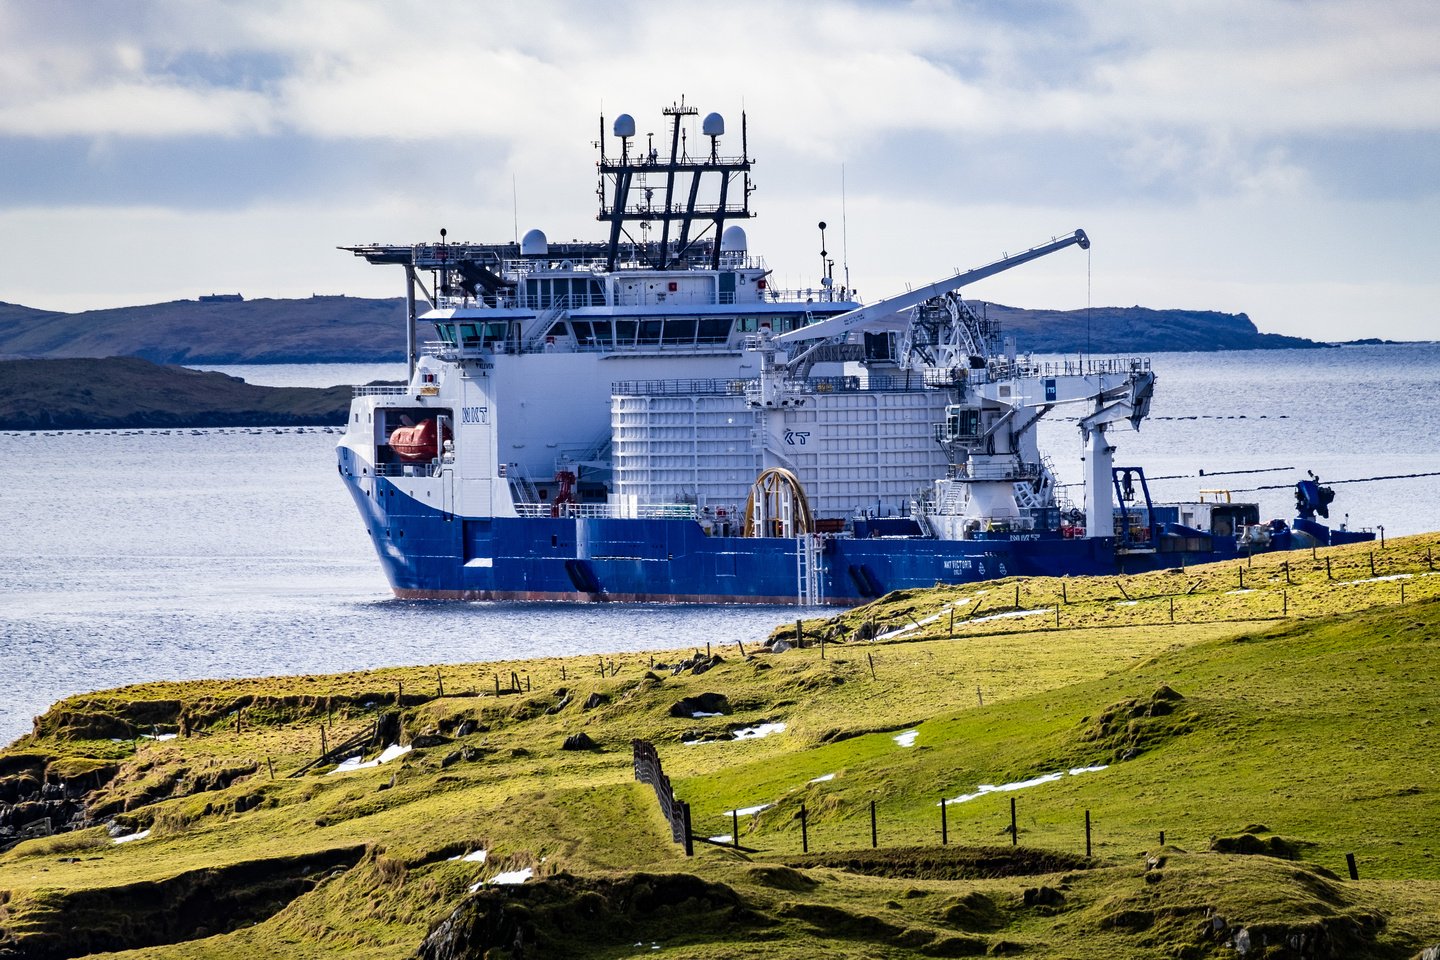 A large ship near a grassy shore.